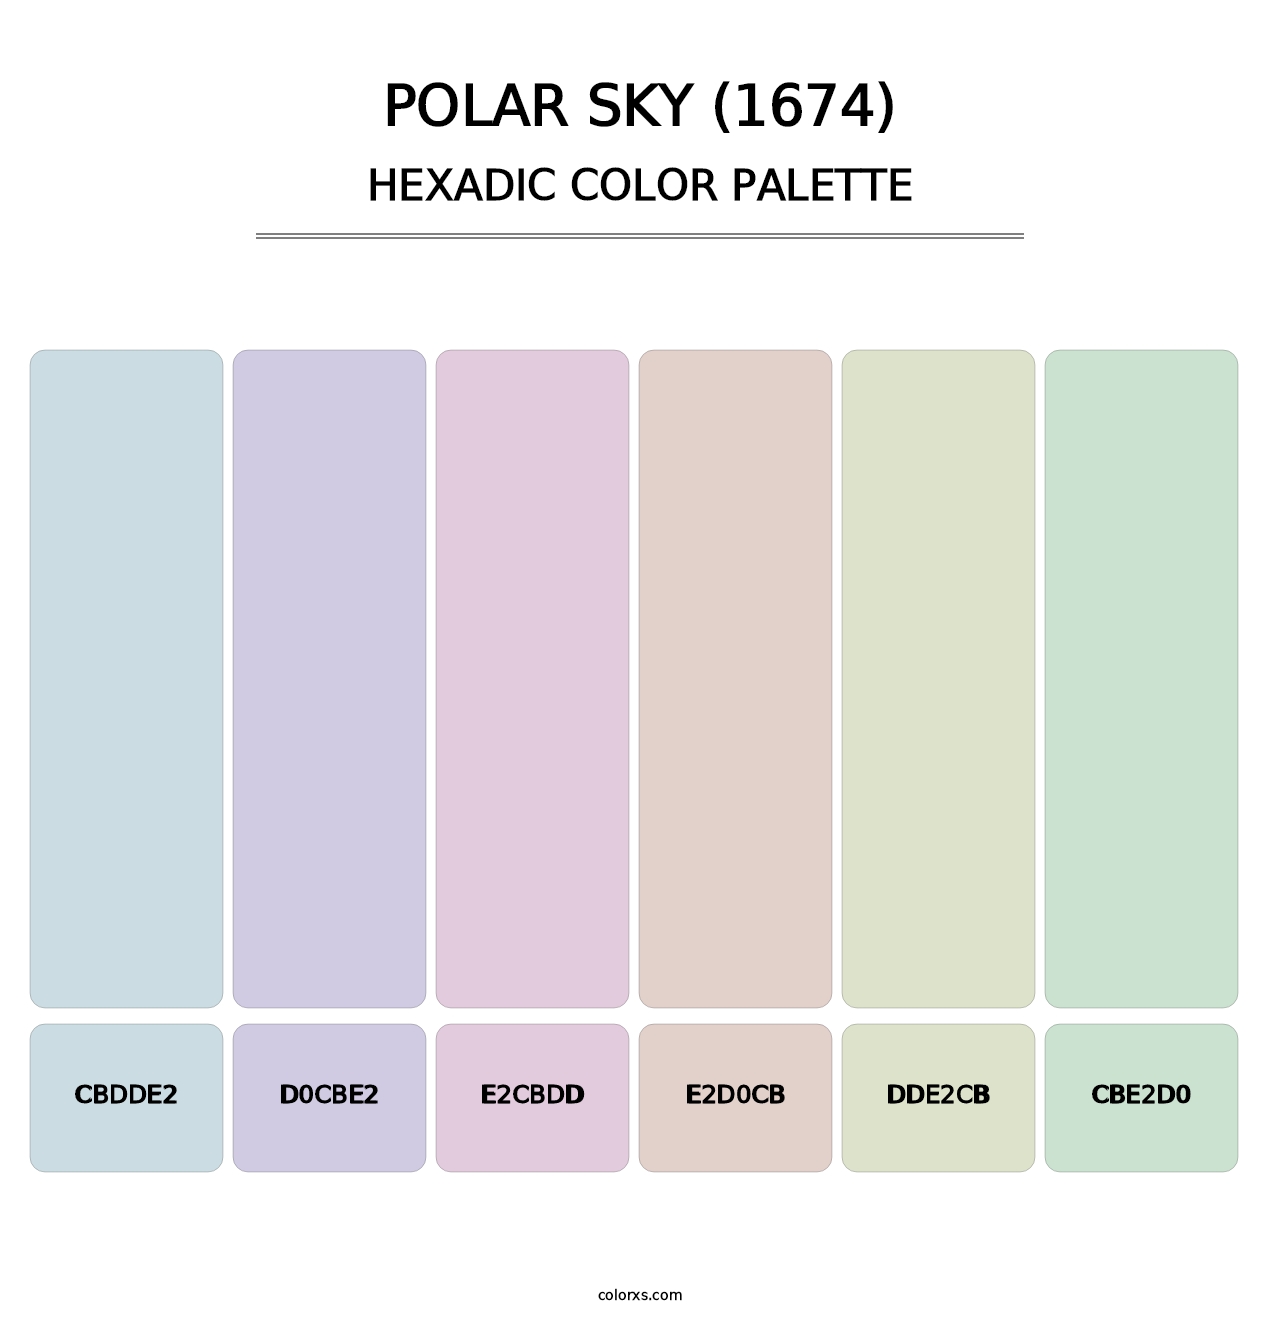 Polar Sky (1674) - Hexadic Color Palette